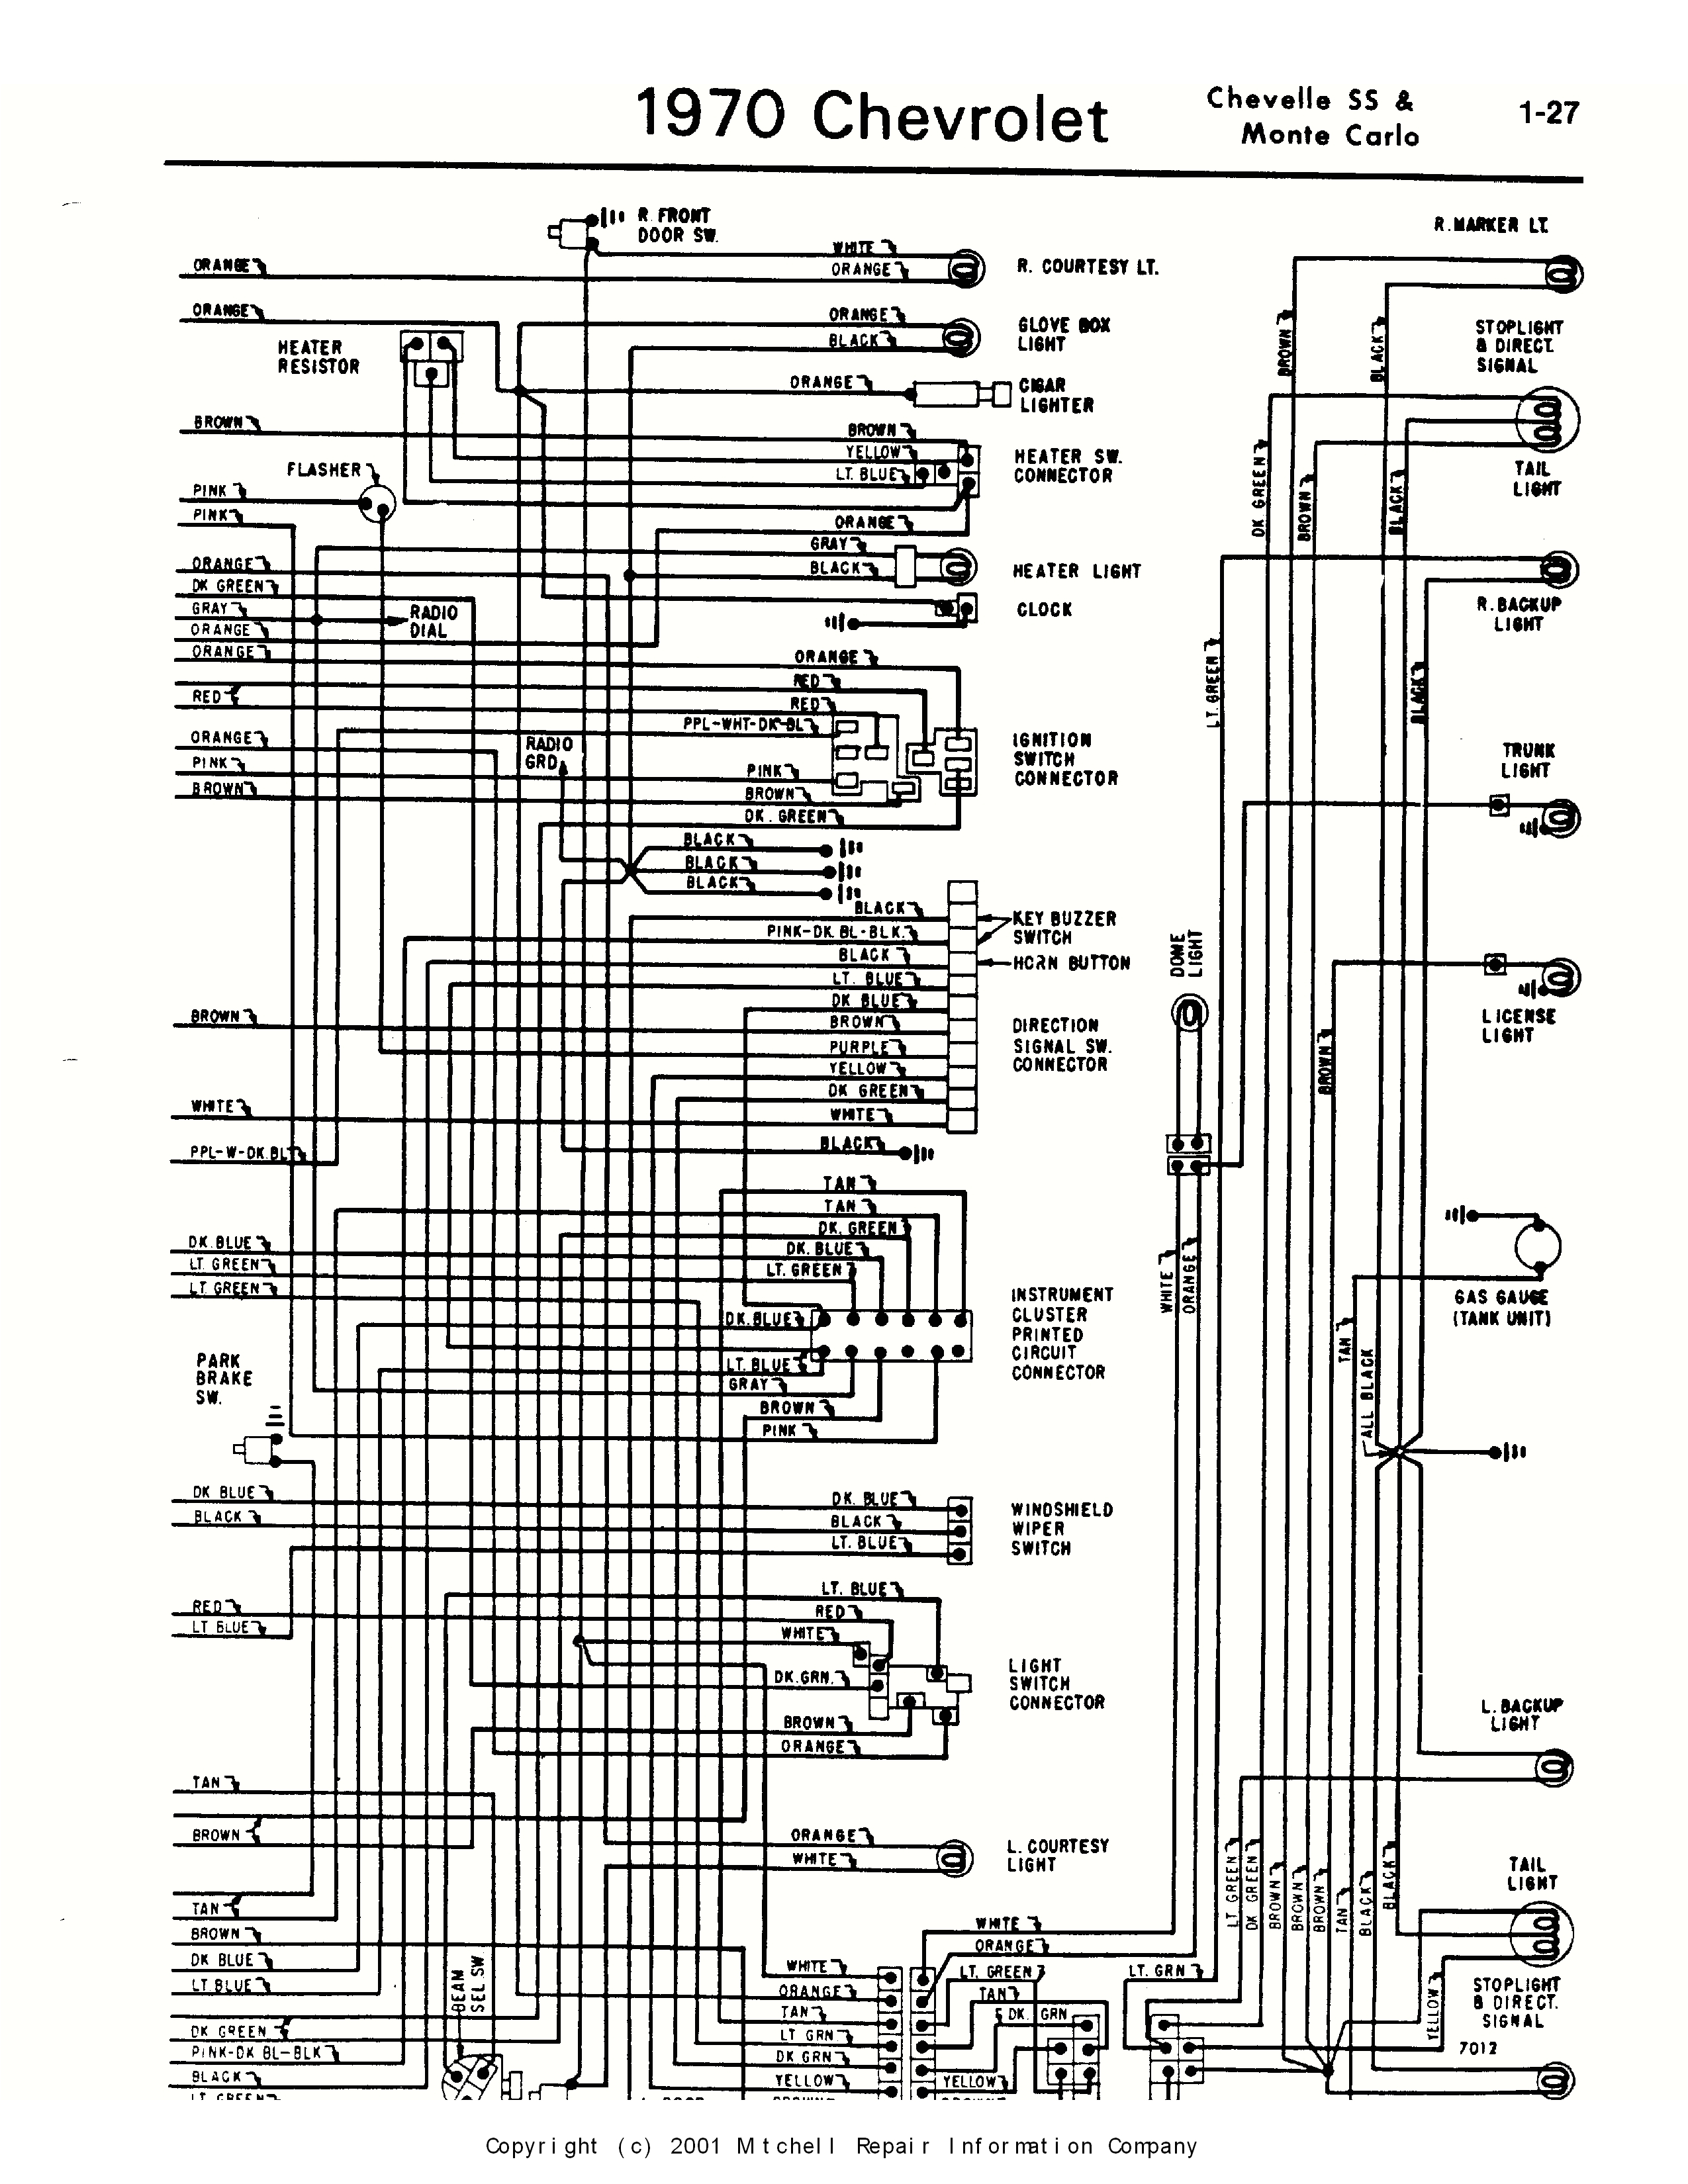 chevy diagrams mix 1970 monti carlo el camino chevelle wiring 2 drawing b